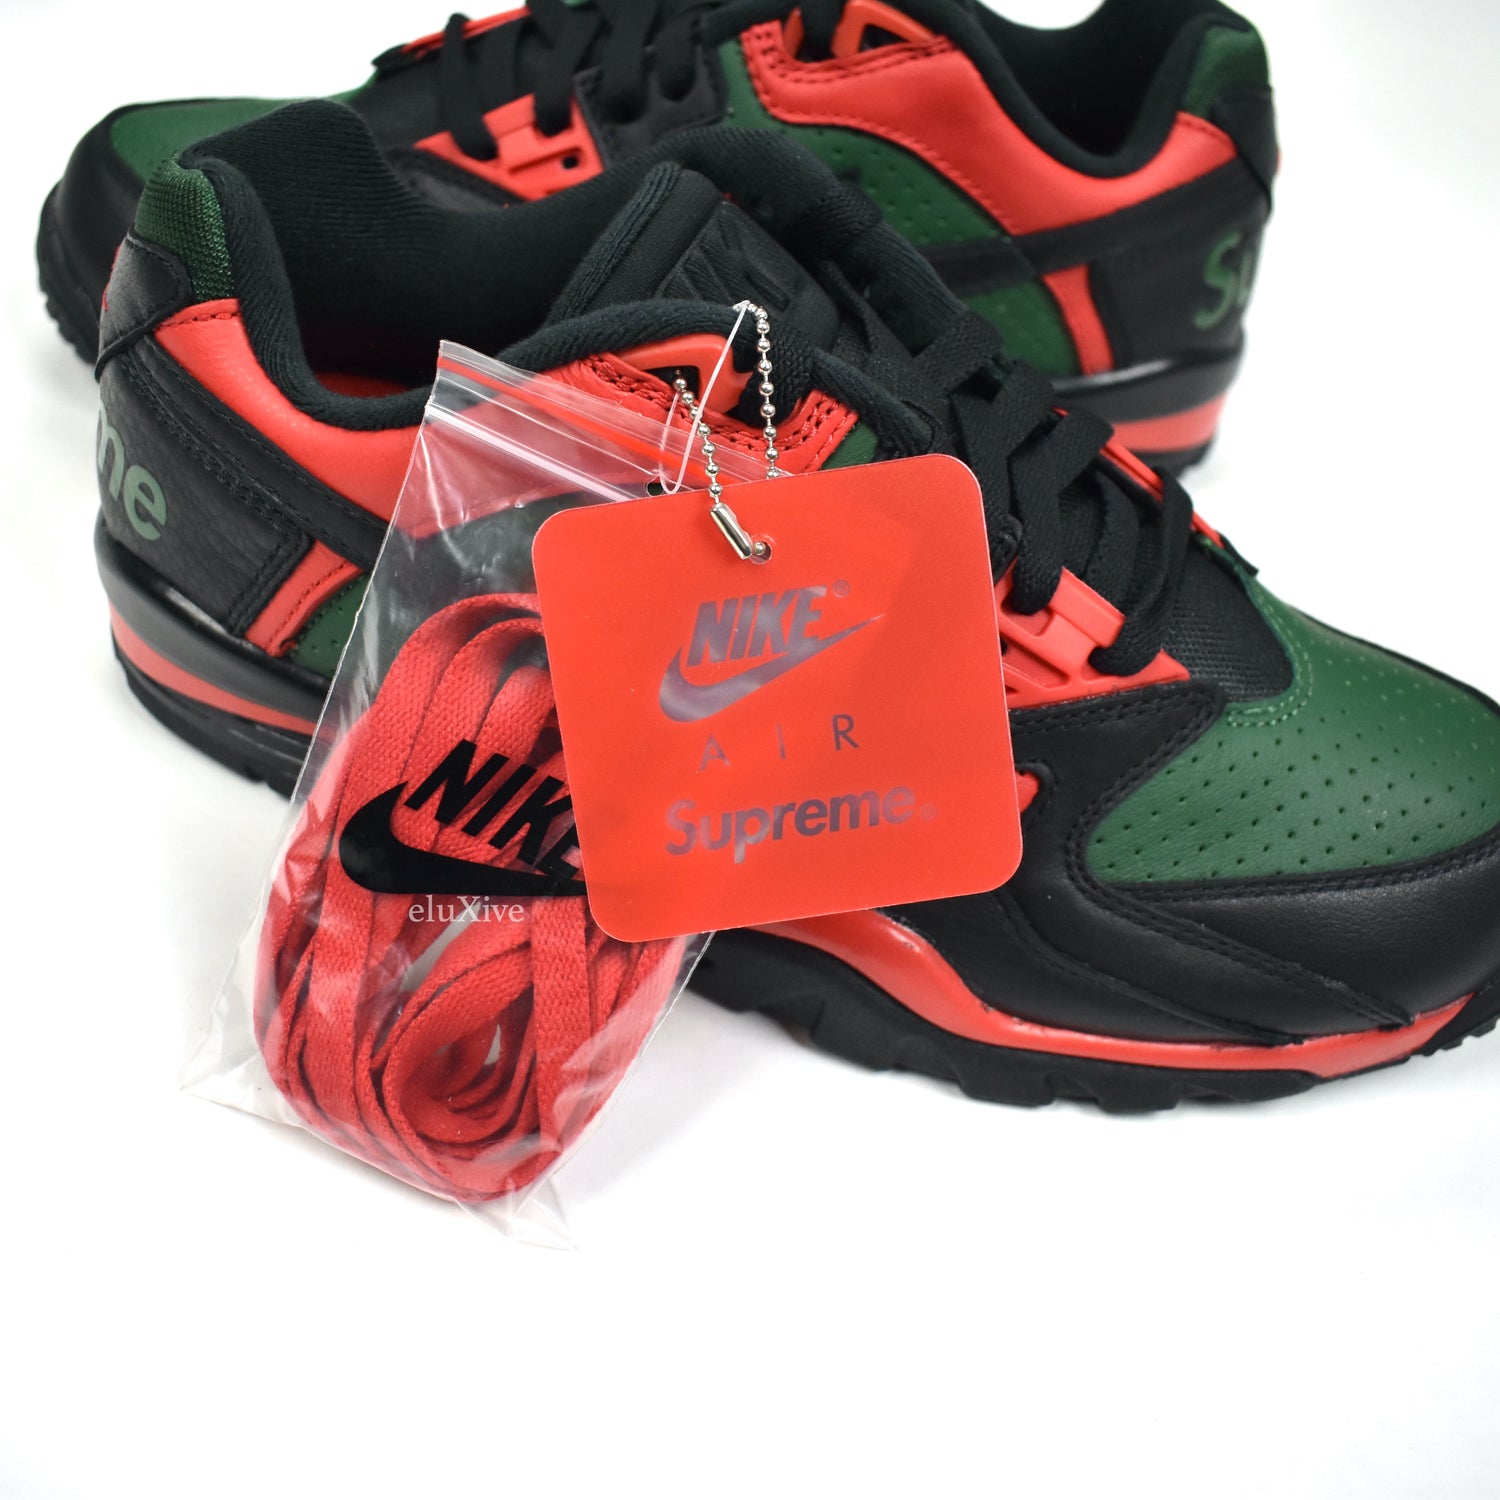 Nike Cross Trainer Low Supreme Black Green Red Men's - CJ5291-001 - US